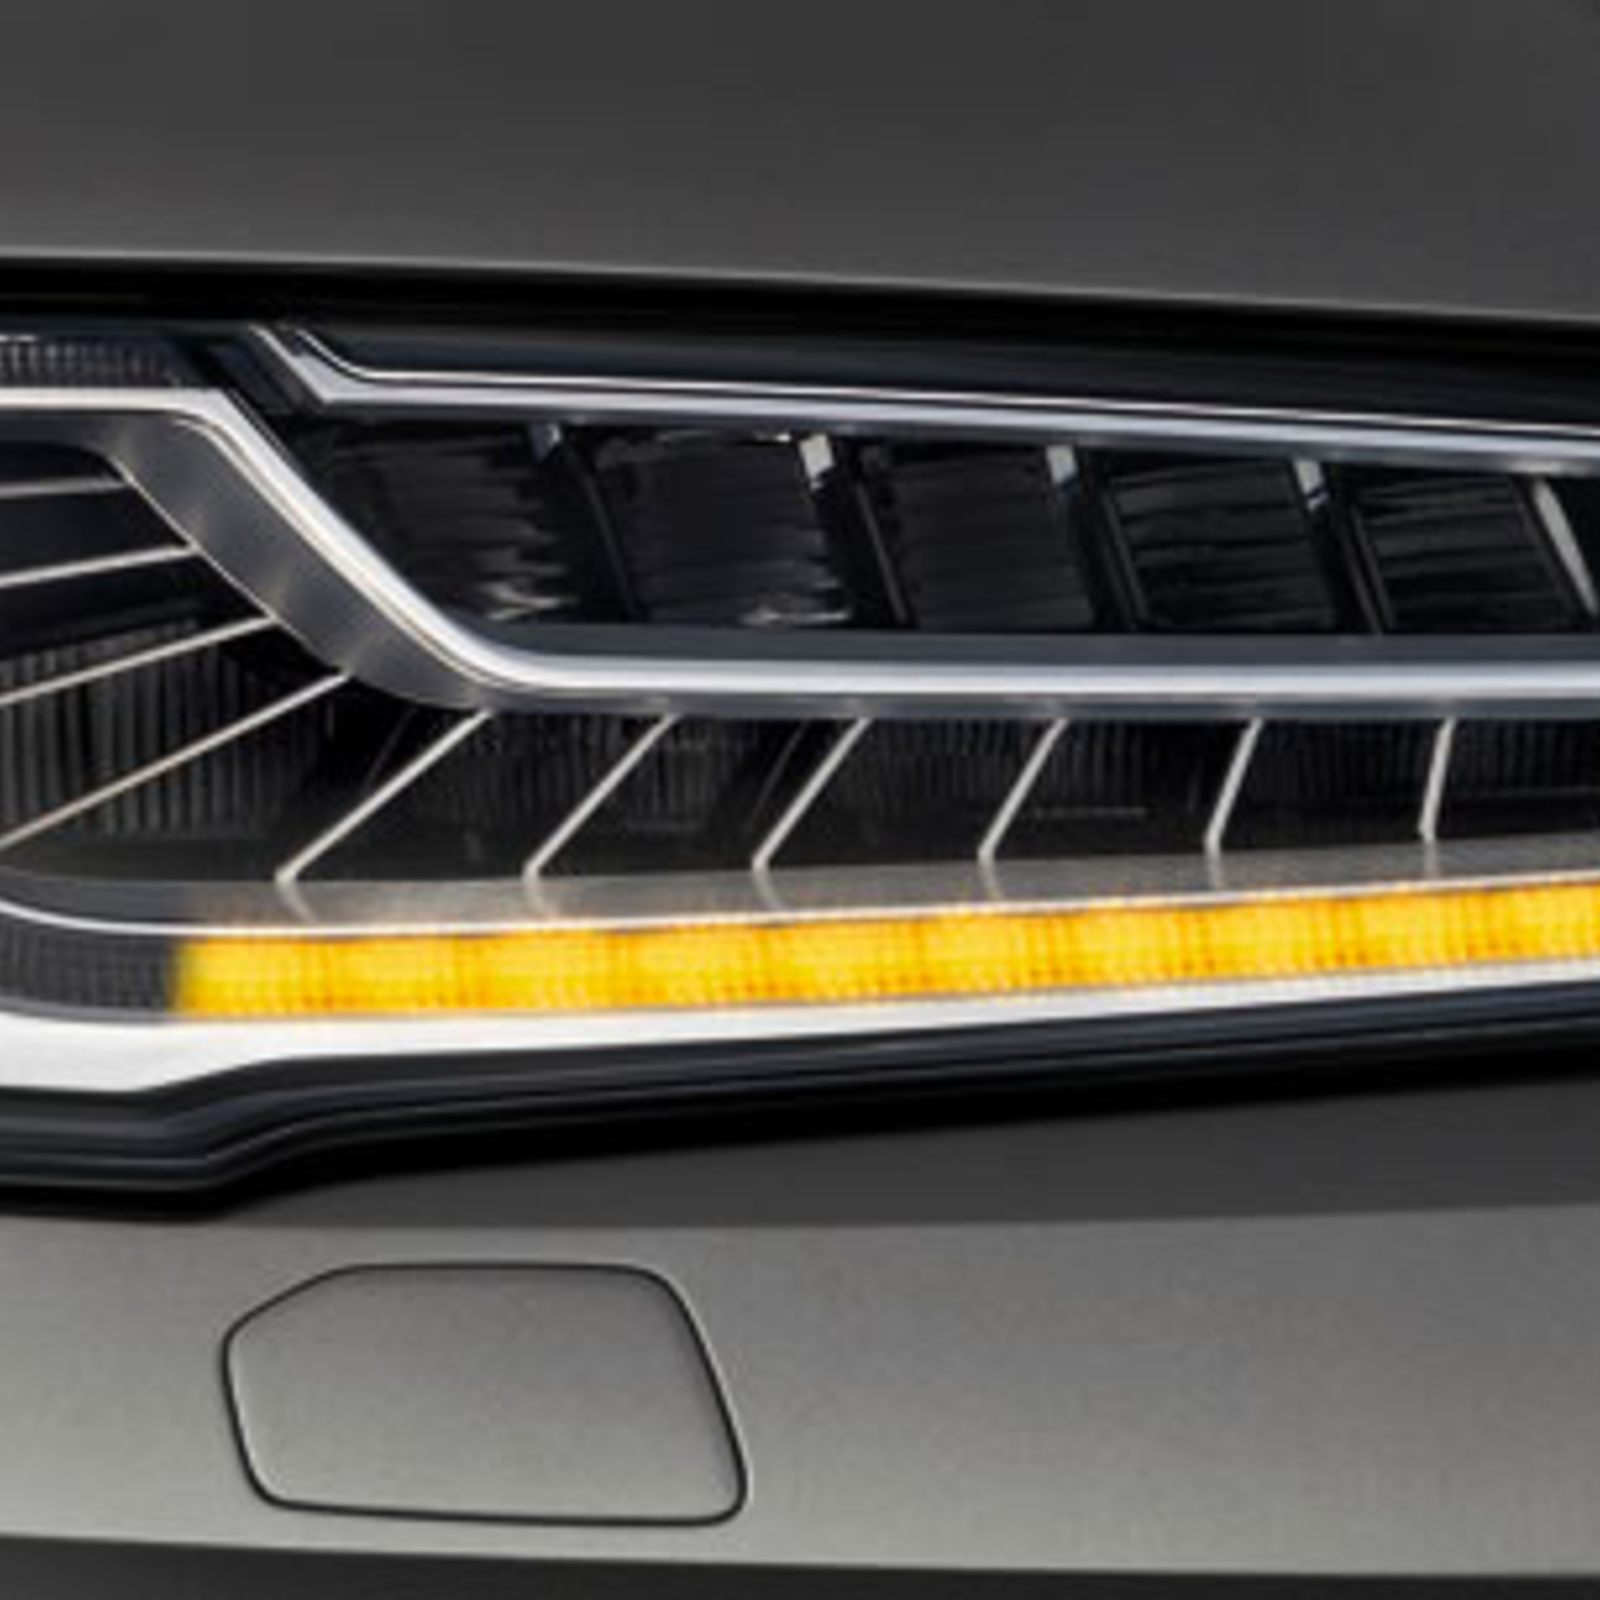 Neuer Audi A8 kommt mit Super-LED-Licht - oe24.at